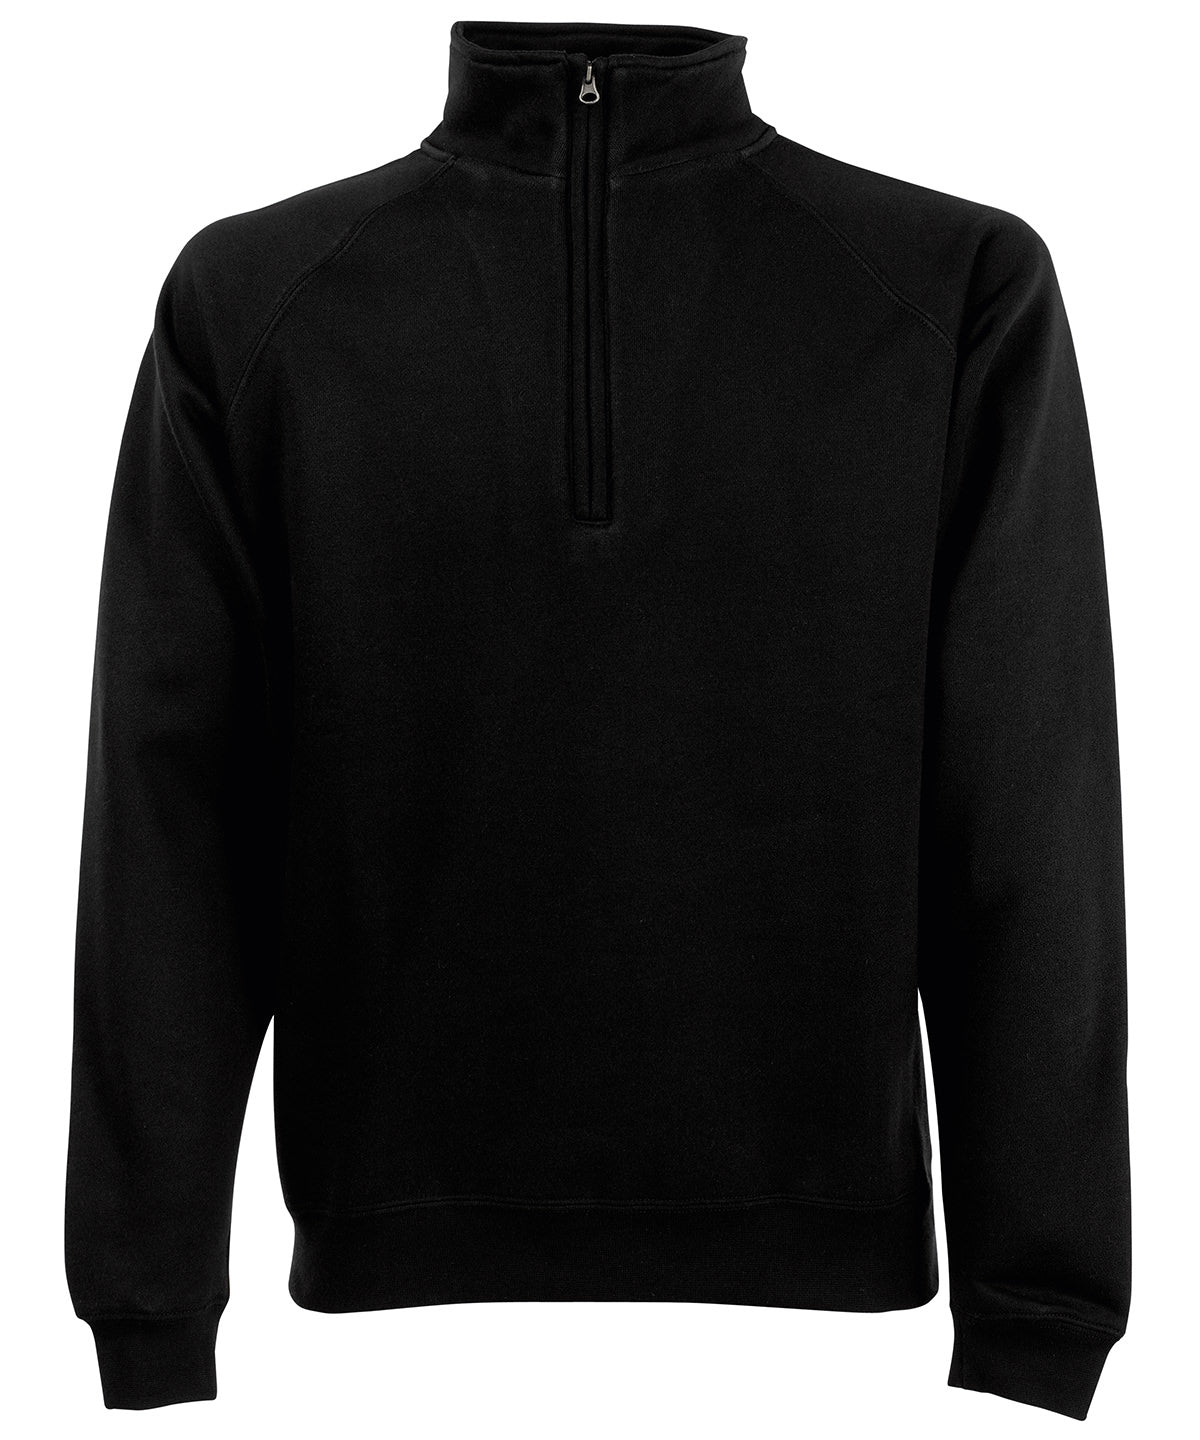 Personalised Sweatshirts - Black Fruit of the Loom Premium 70/30 zip-neck sweatshirt